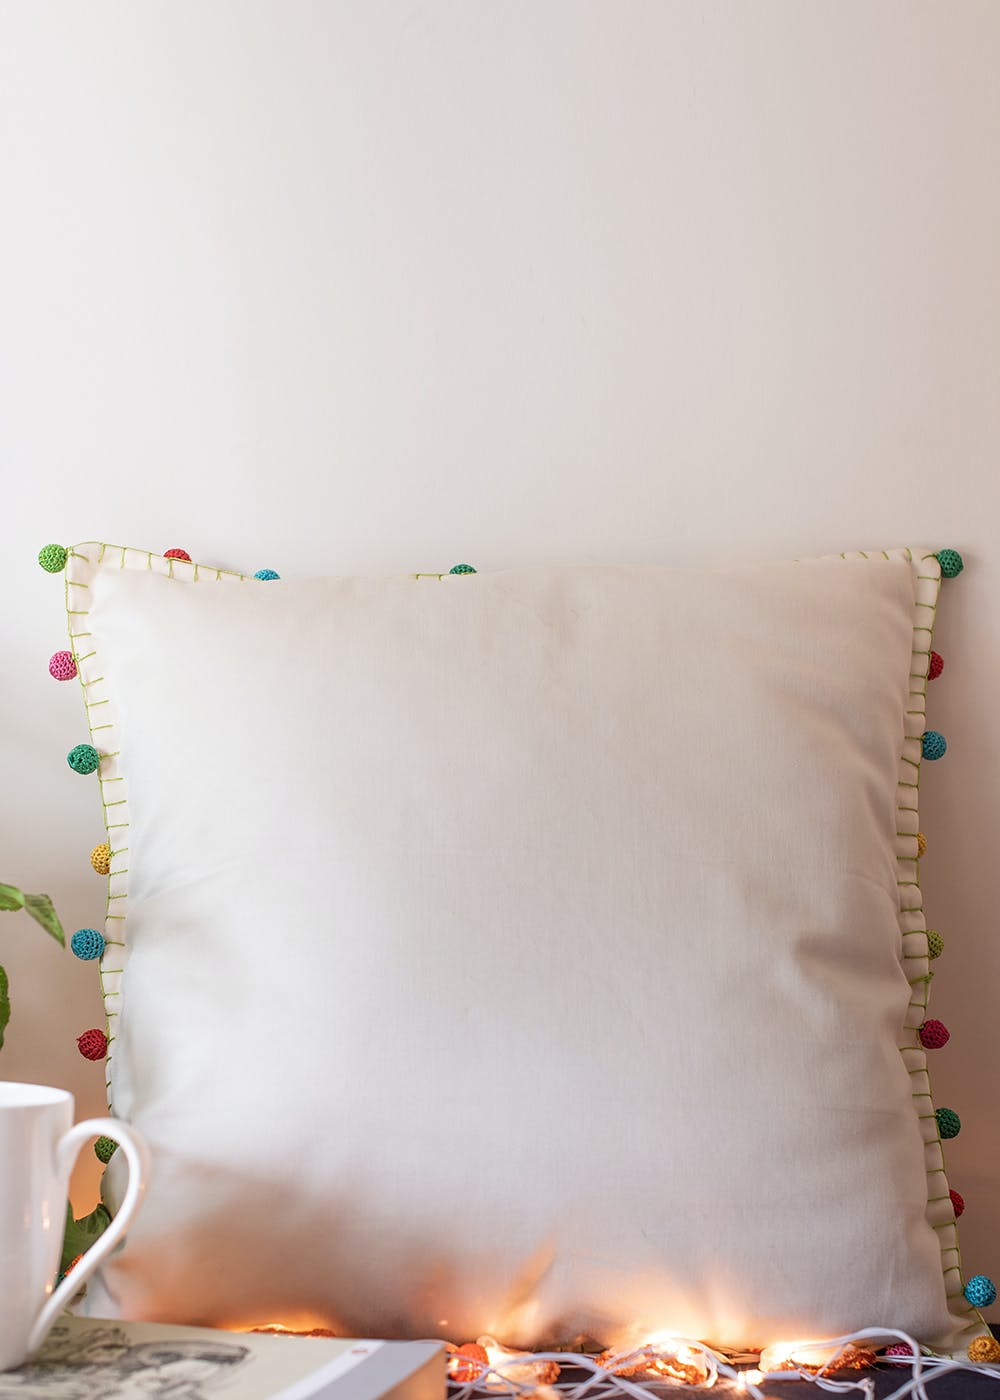 Handmade Cushion Cover - Crochet Beads